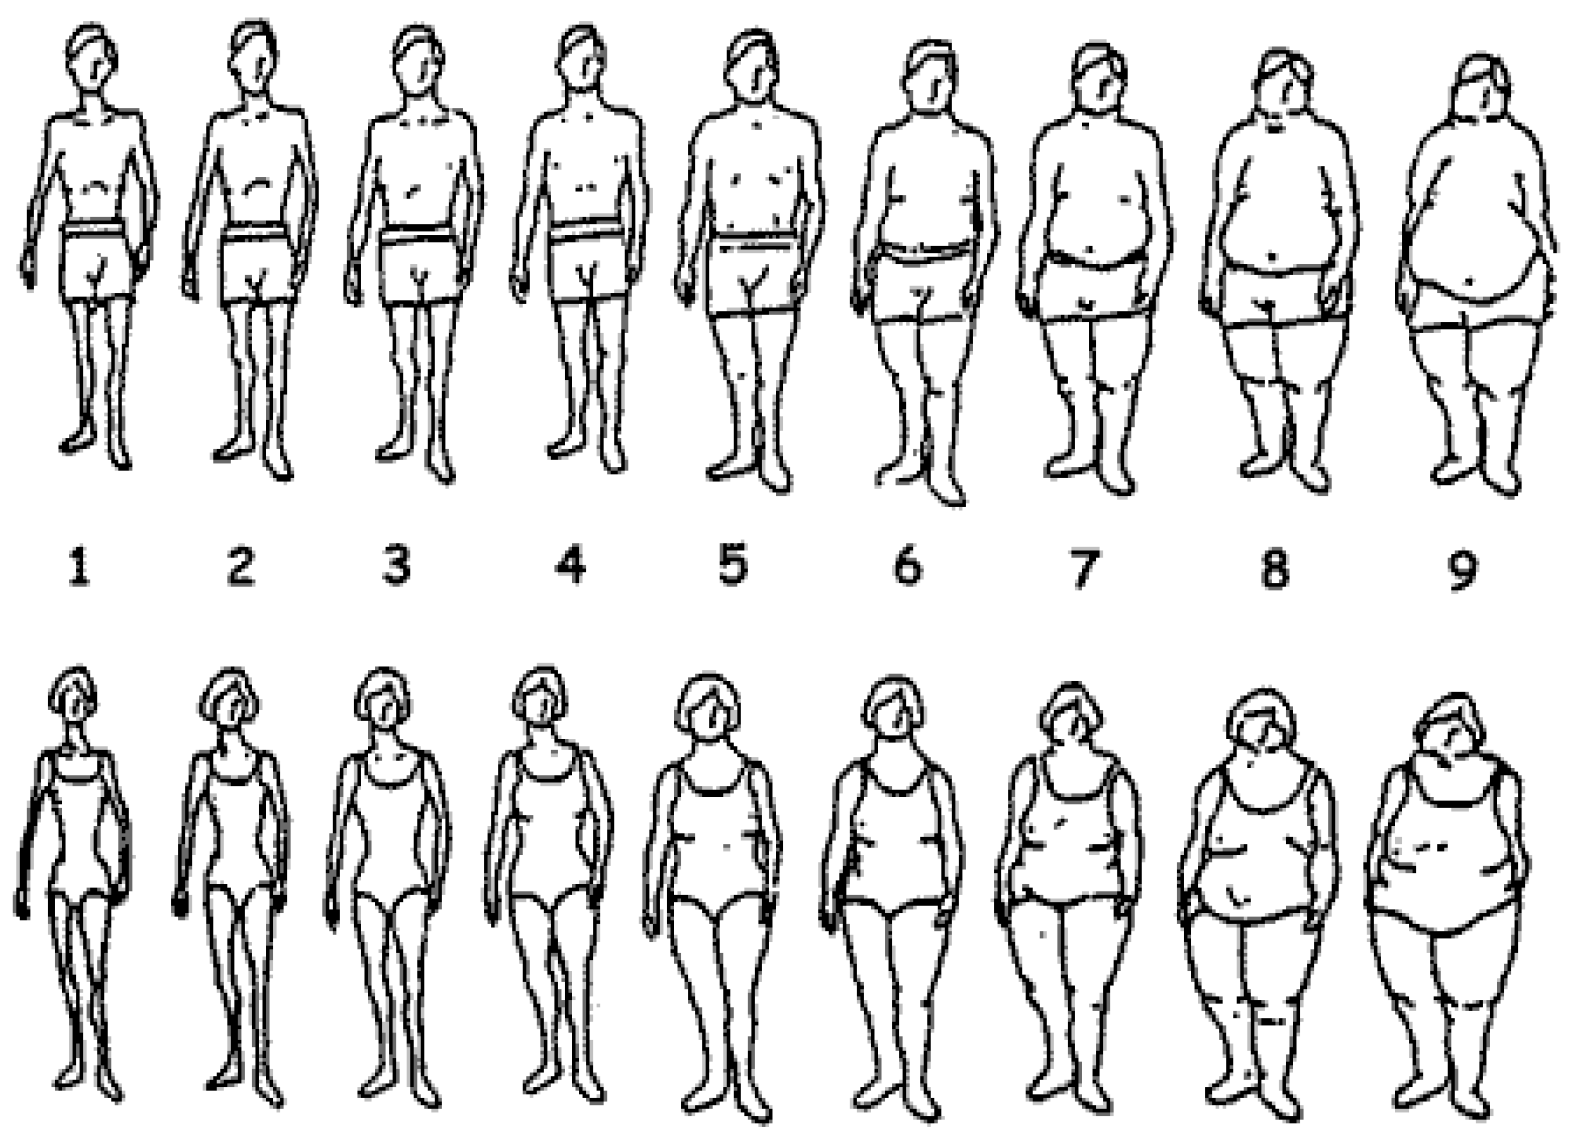 Виды мужской фигуры. Типы мужского телосложения. Типы фигур у мужчин и женщин. Типы женского телосложения. Типы женских фигур по весу.